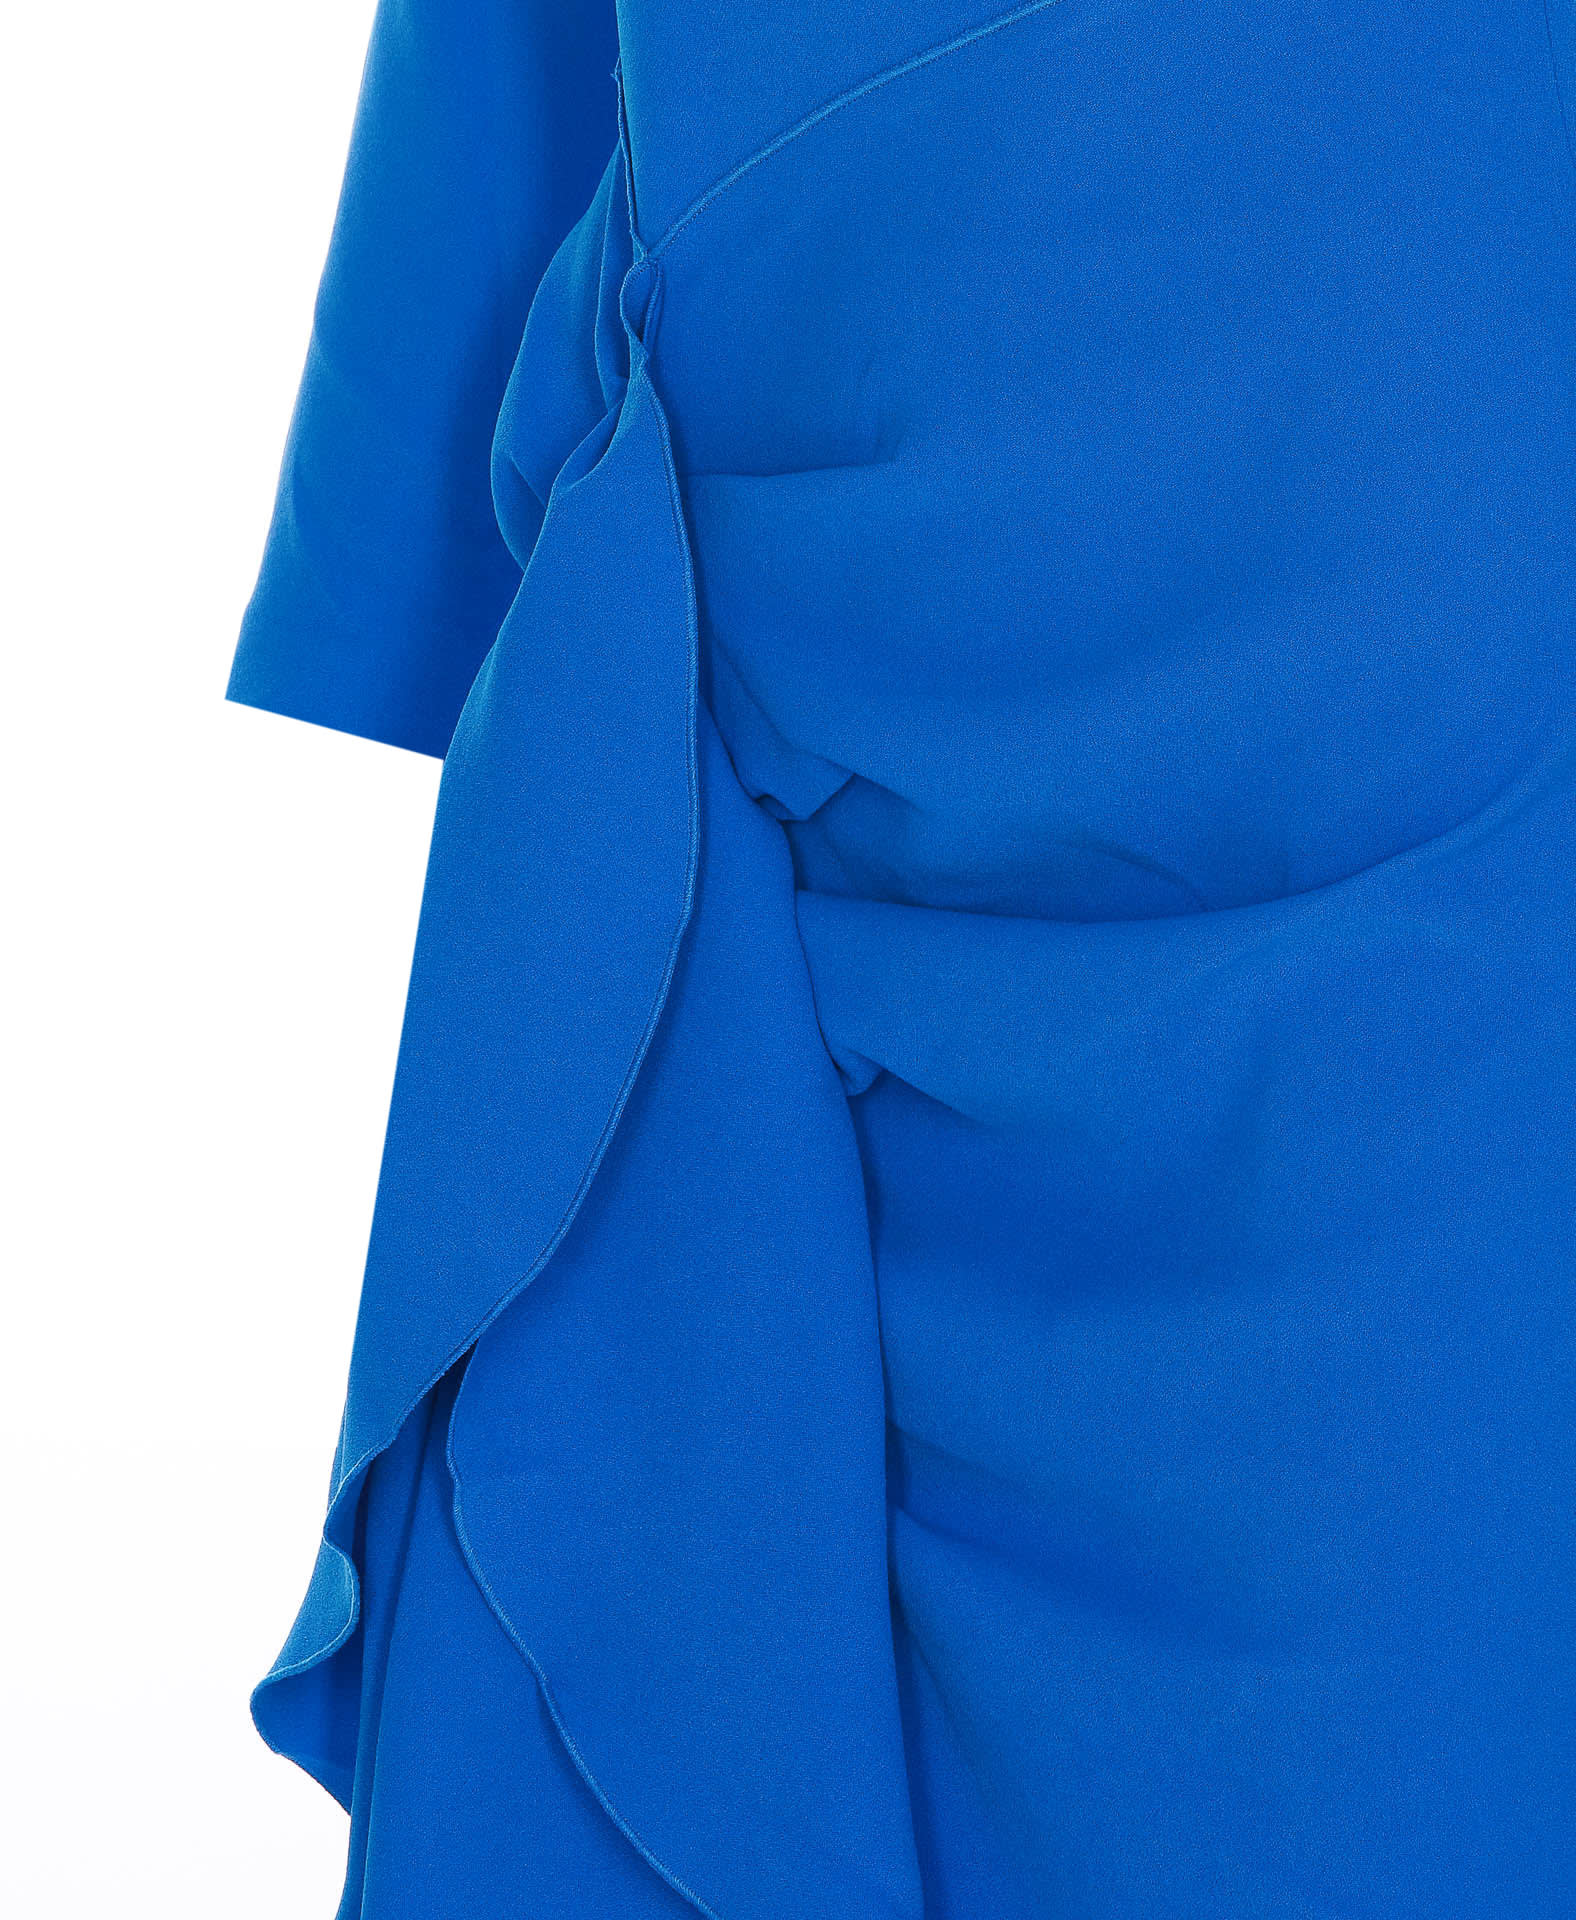 Shop Solace London Nia Maxi Dress In Blue